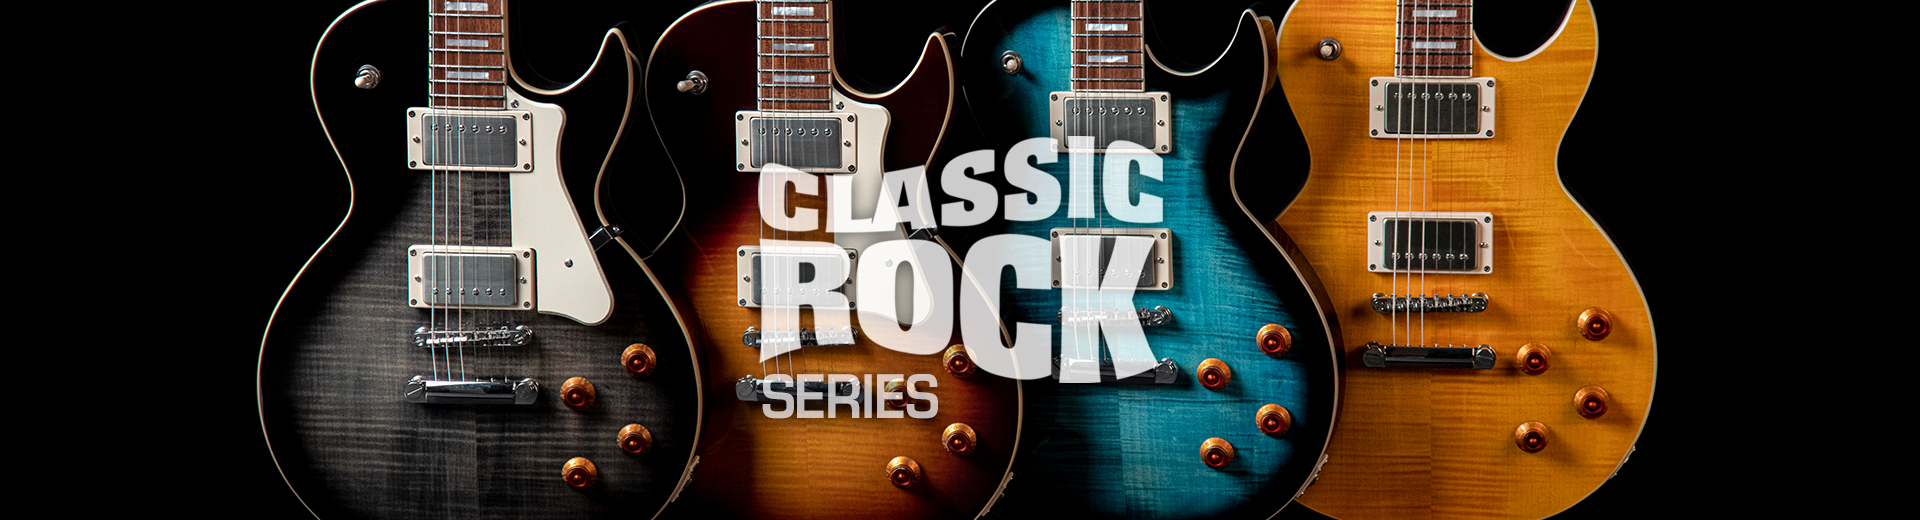 Cort Classic Rock Series